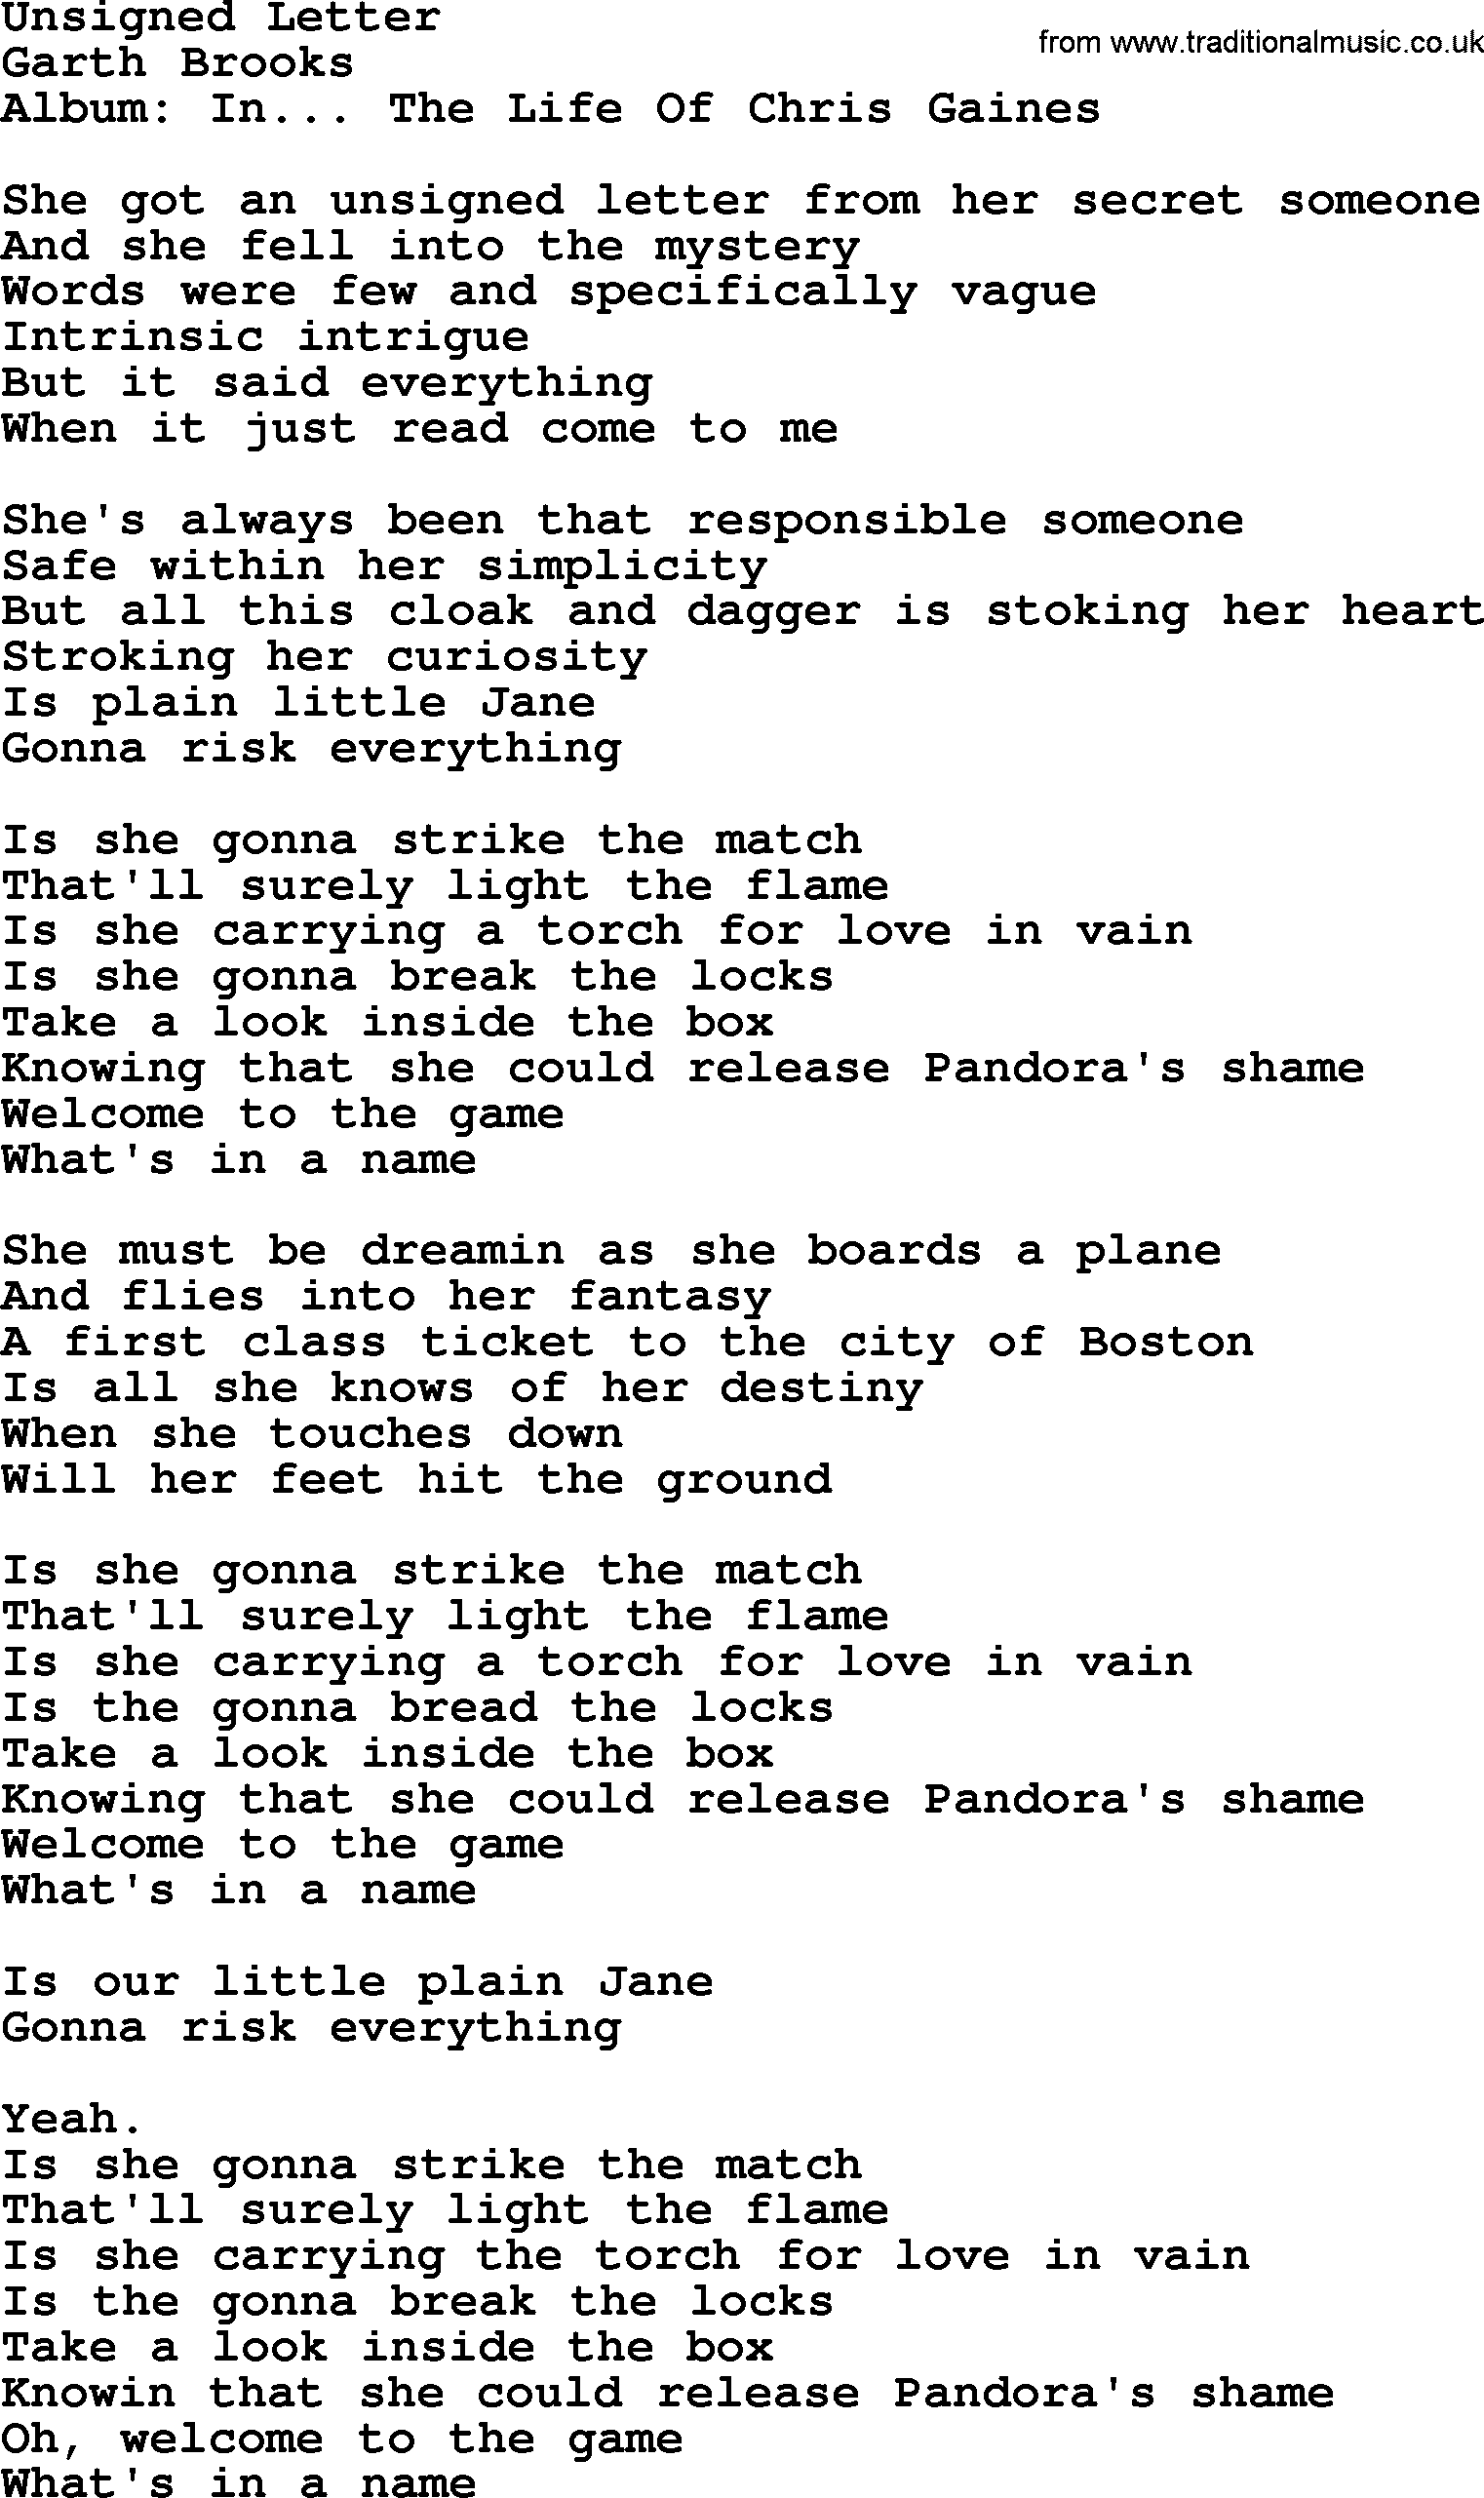 Garth Brooks song: Unsigned Letter, lyrics